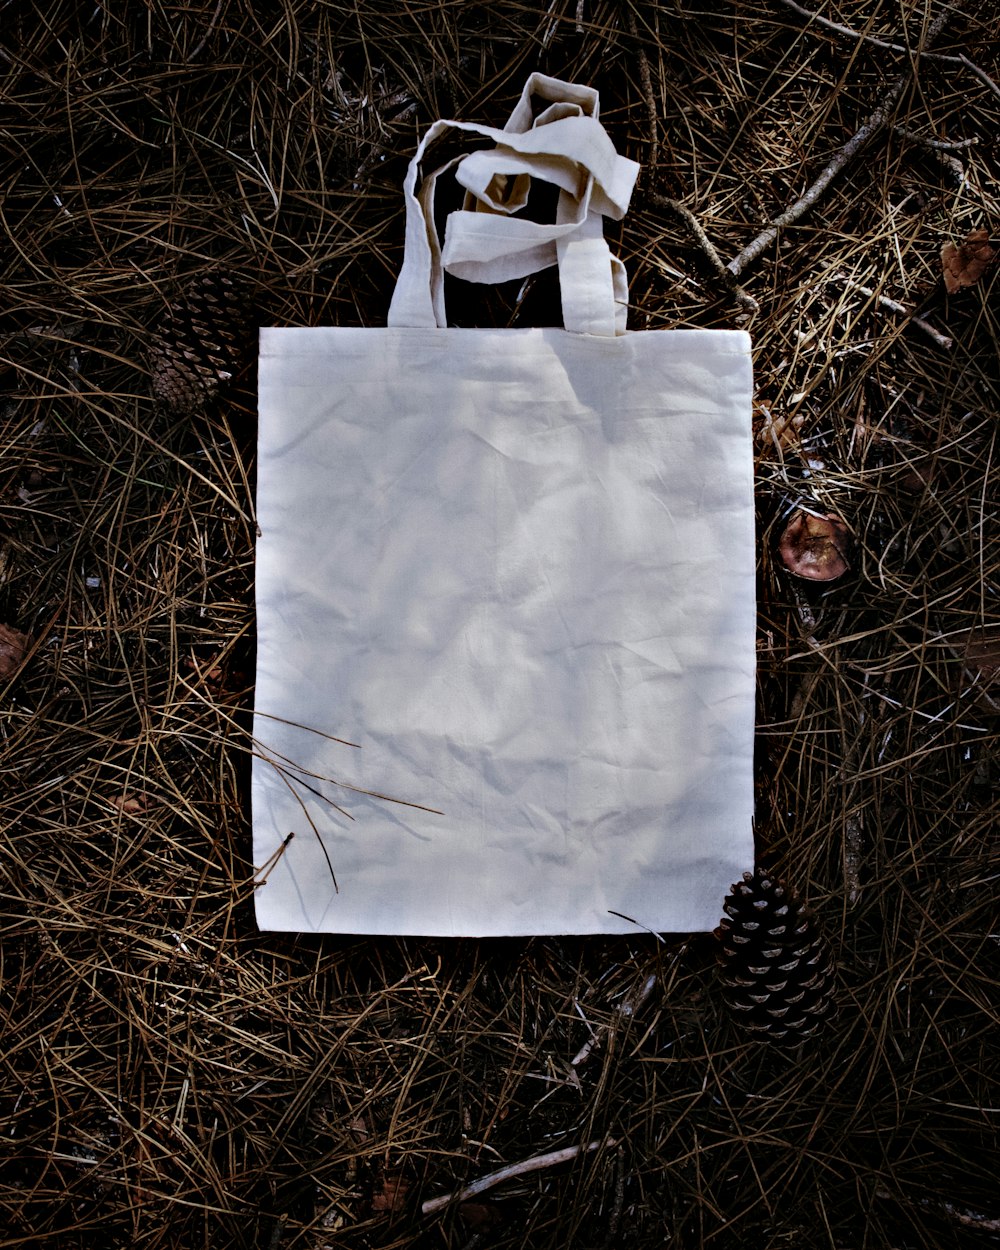 sac en papier blanc sur herbe brune